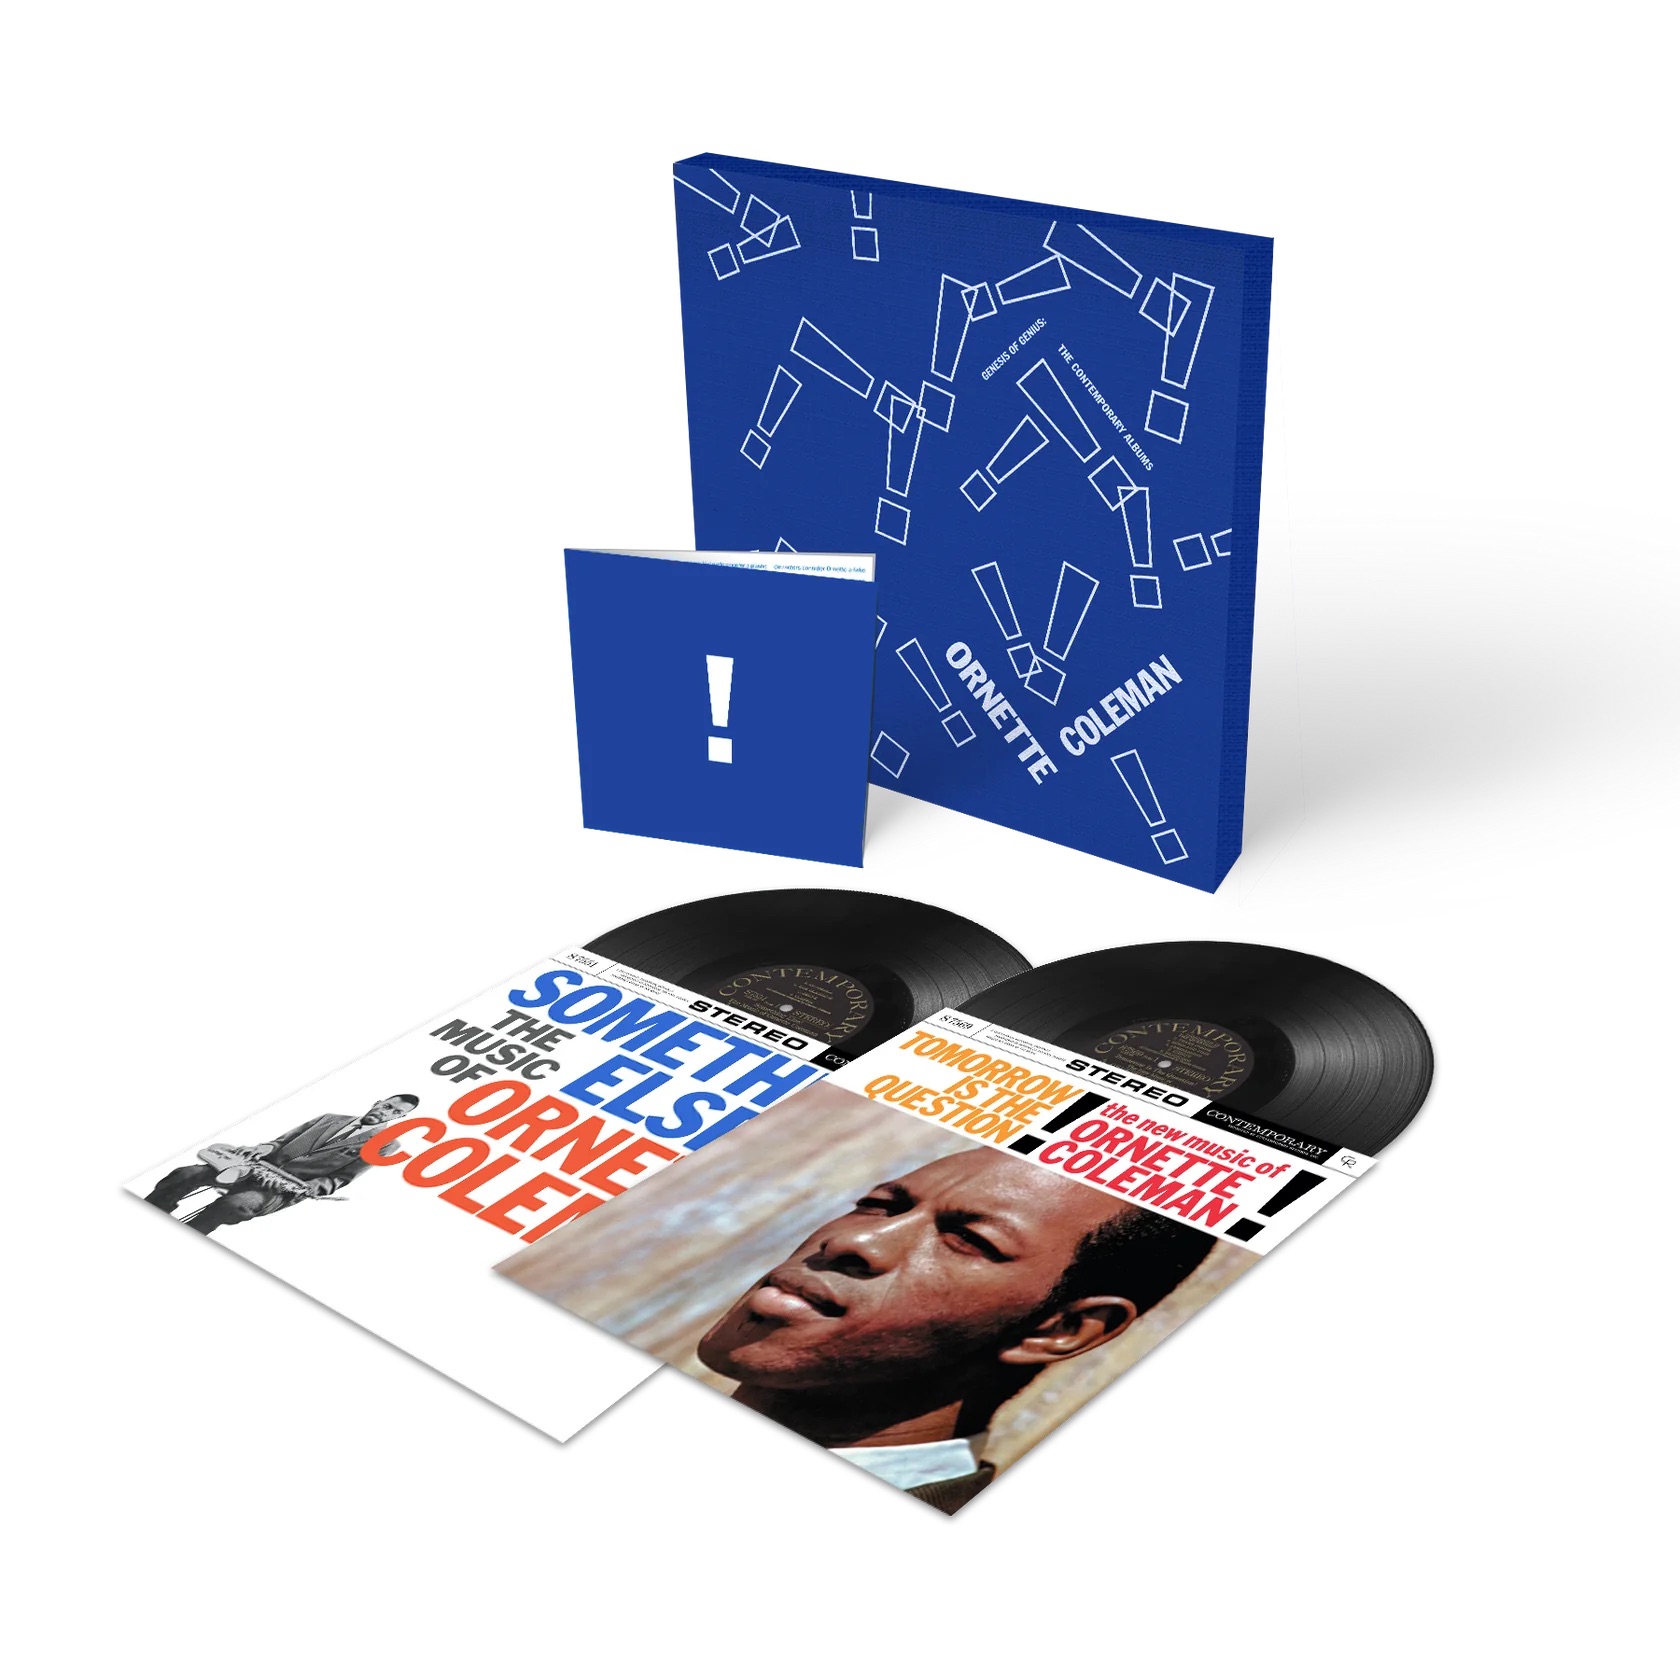 Ornette Coleman 'Genesis Of Genius' vinyl box set review